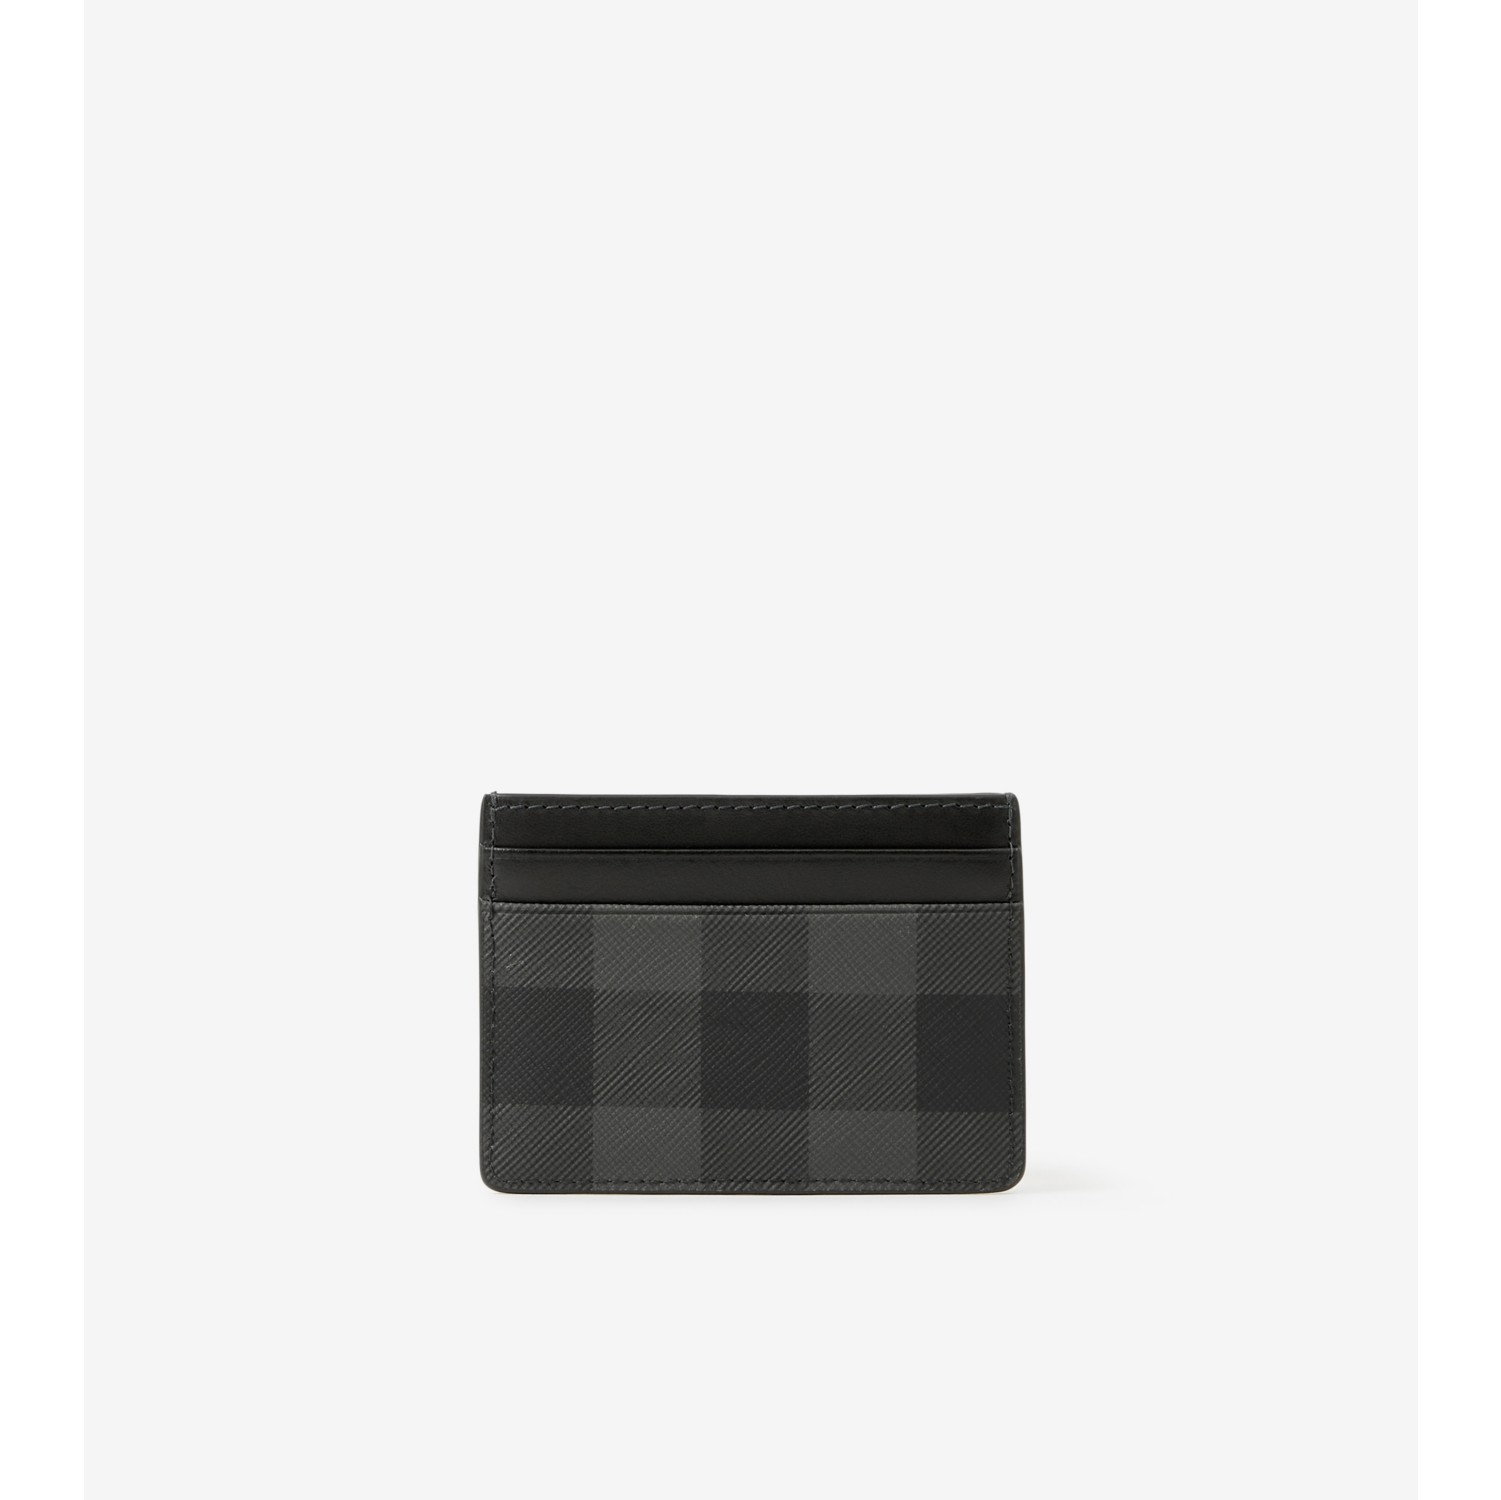 Louis Vuitton Small bags, wallets & cases for Men - Vestiaire Collective